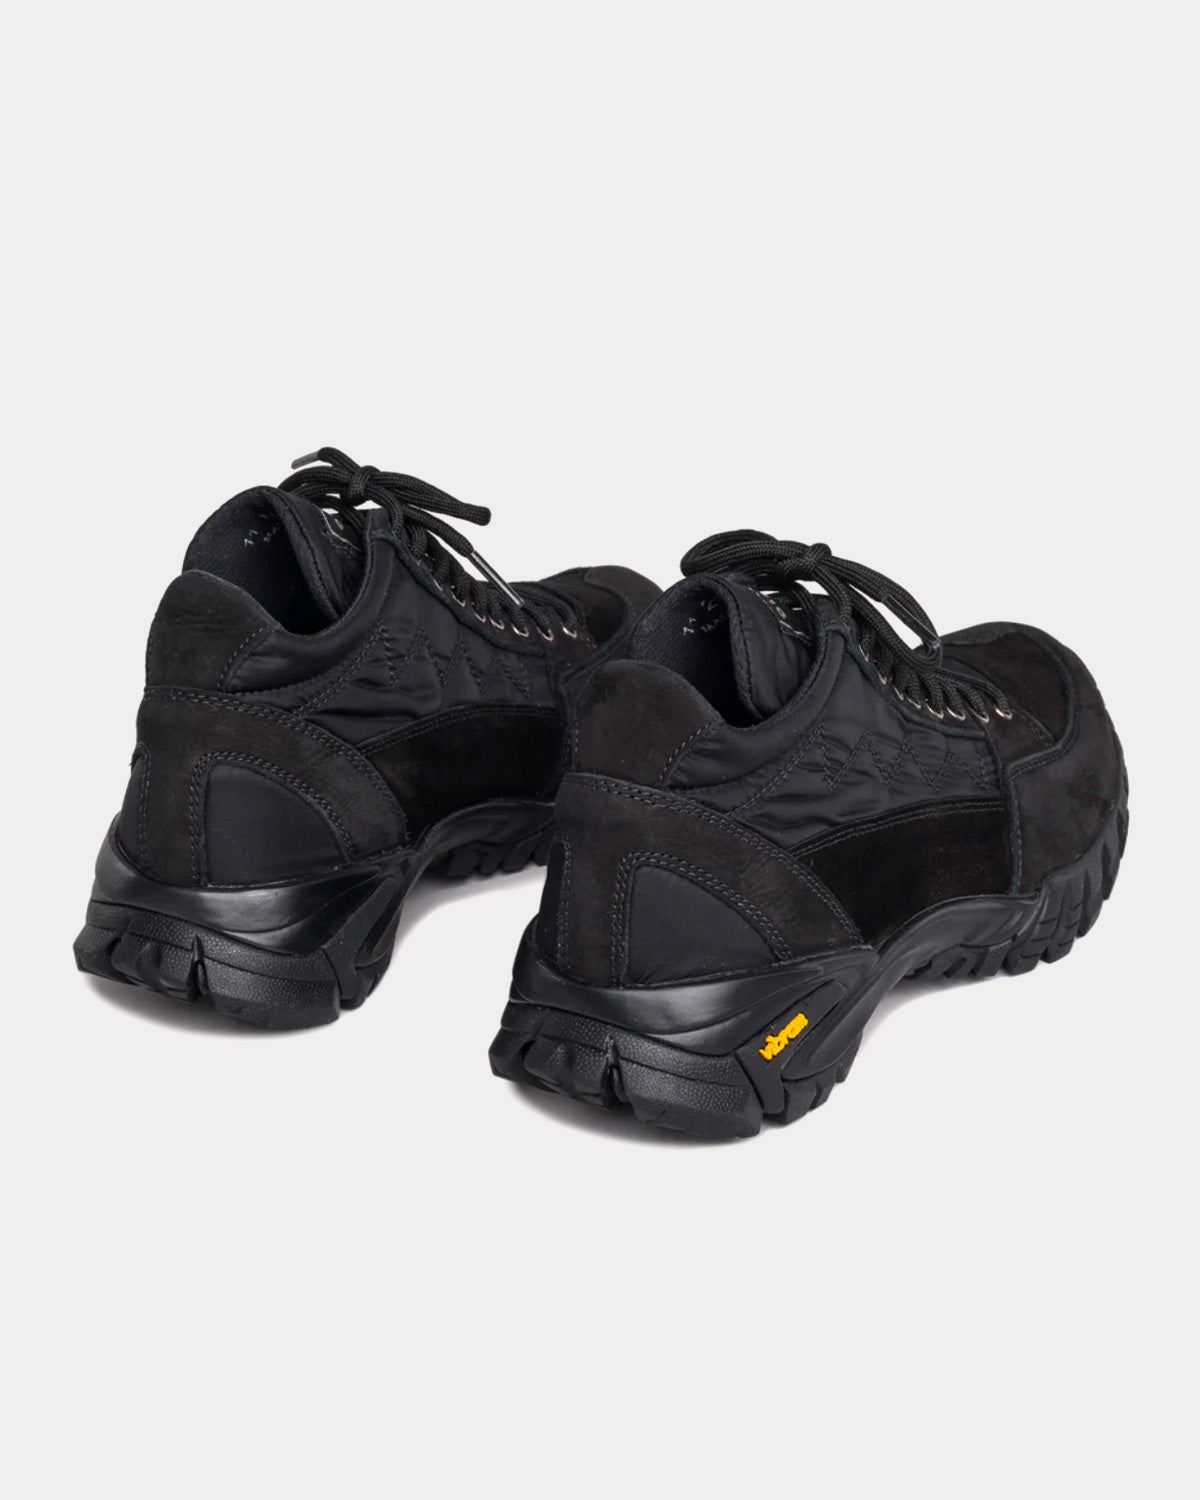 Diemme - Possagno Bomber Black Mid Top Sneakers